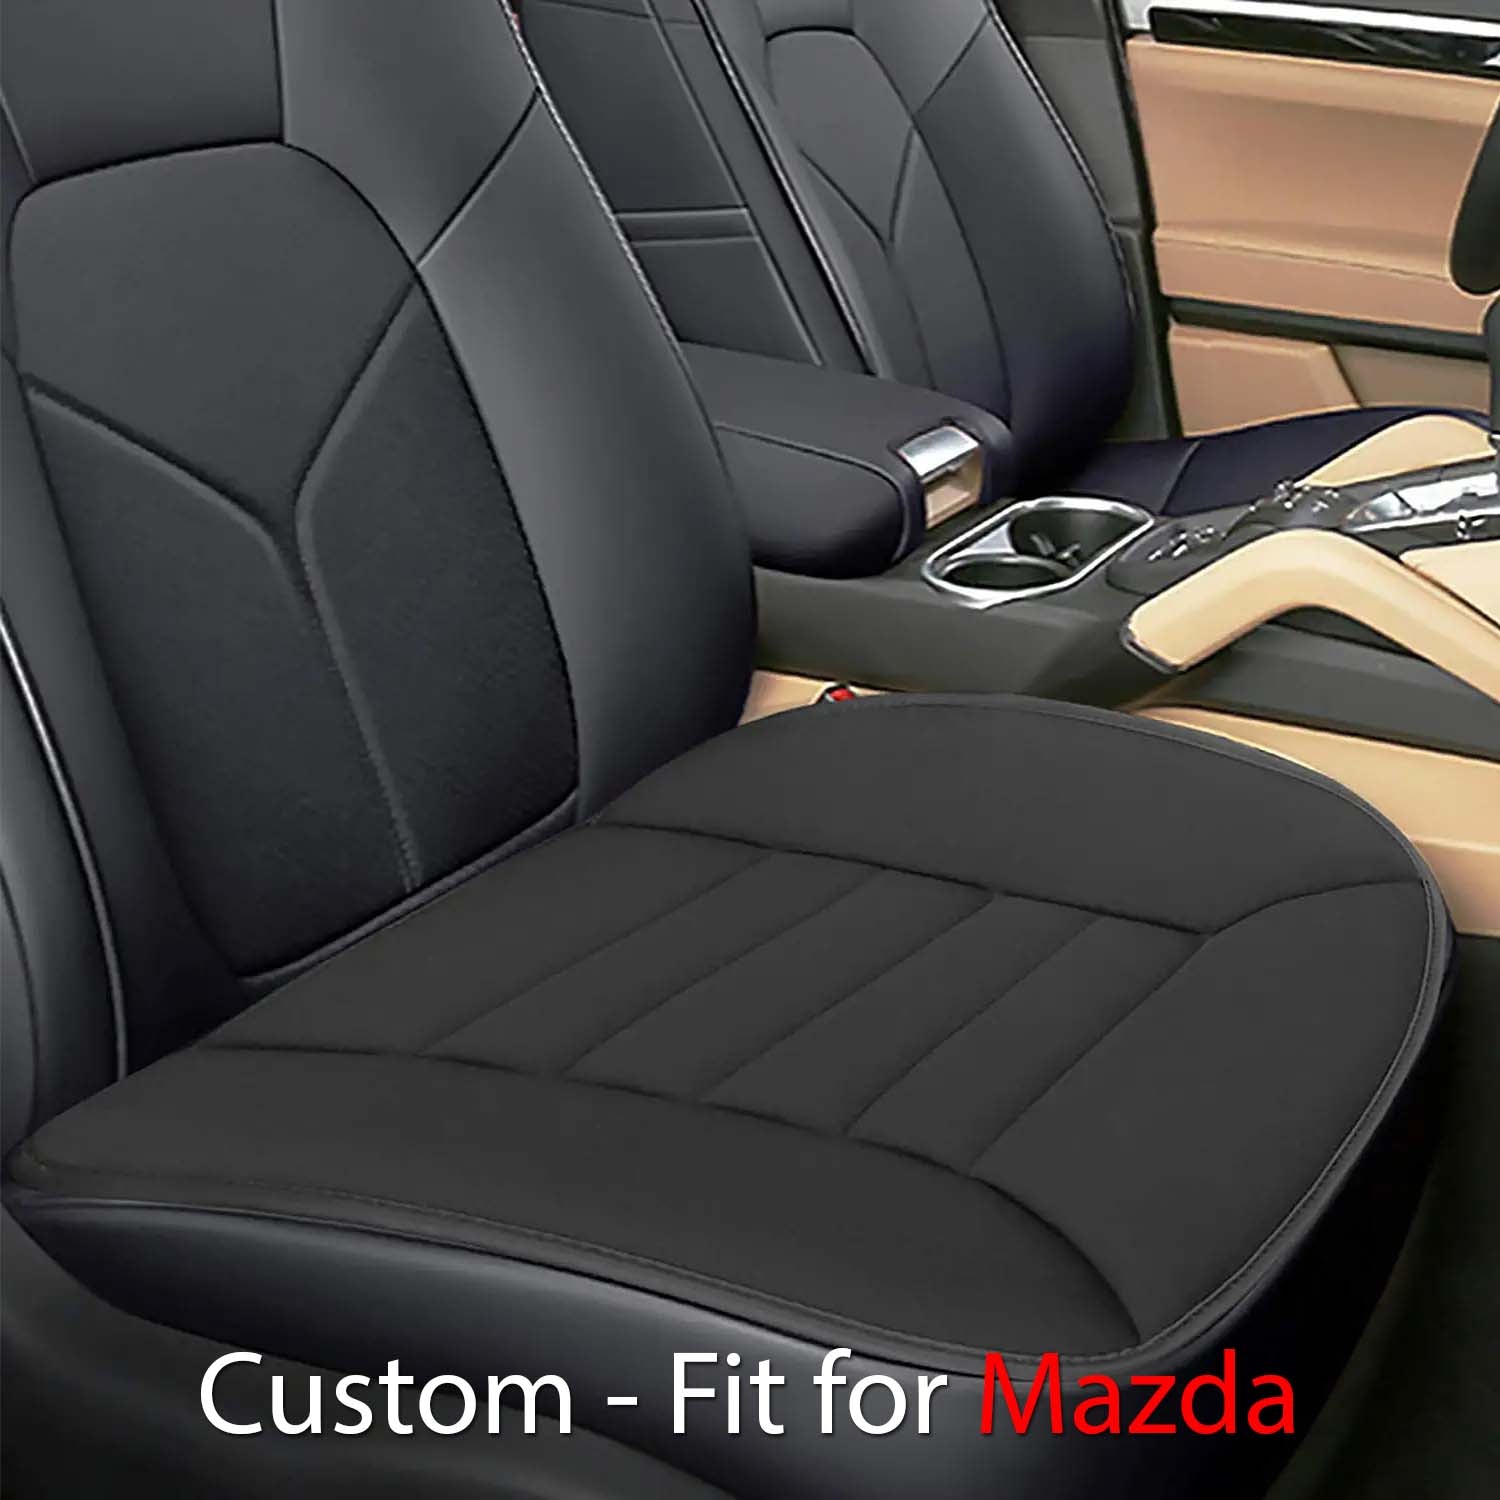 Car Seat Cushion with 1.2inch Comfort Memory Foam, Custom-Fit For Car, Seat Cushion for Car and Office Chair DLMA247